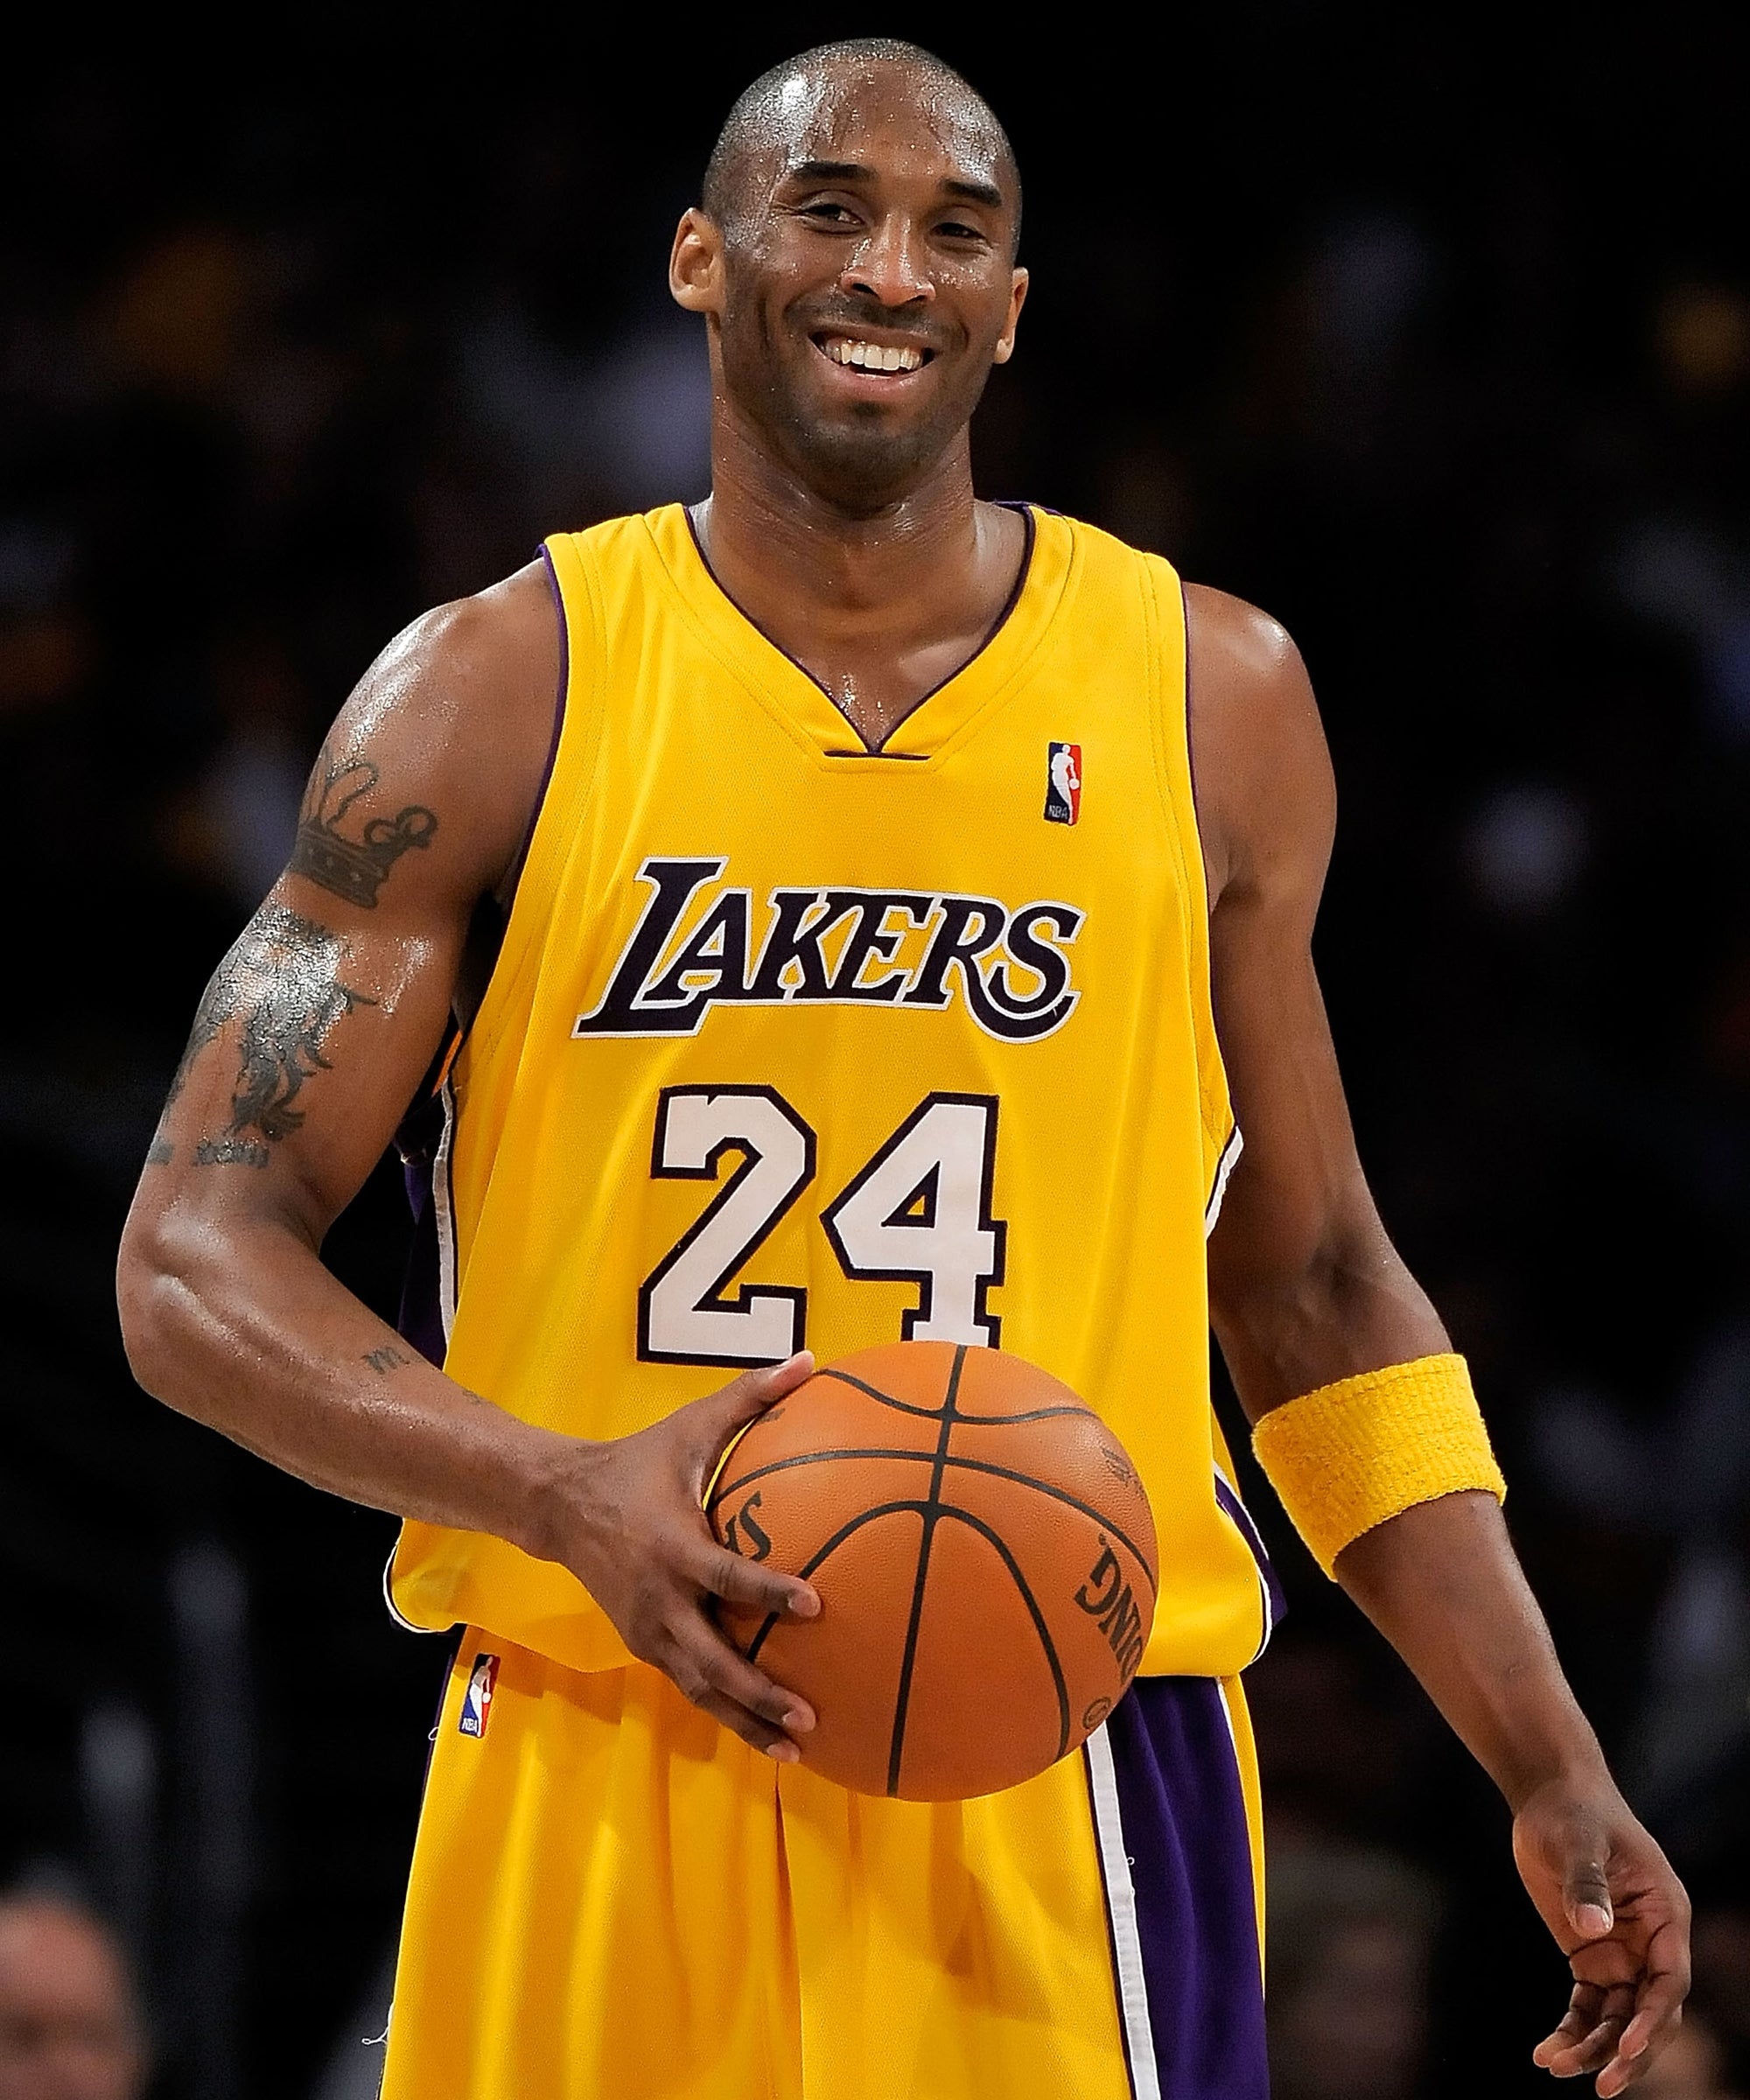 Why was basketball legend Kobe Bryant called Black Mamba